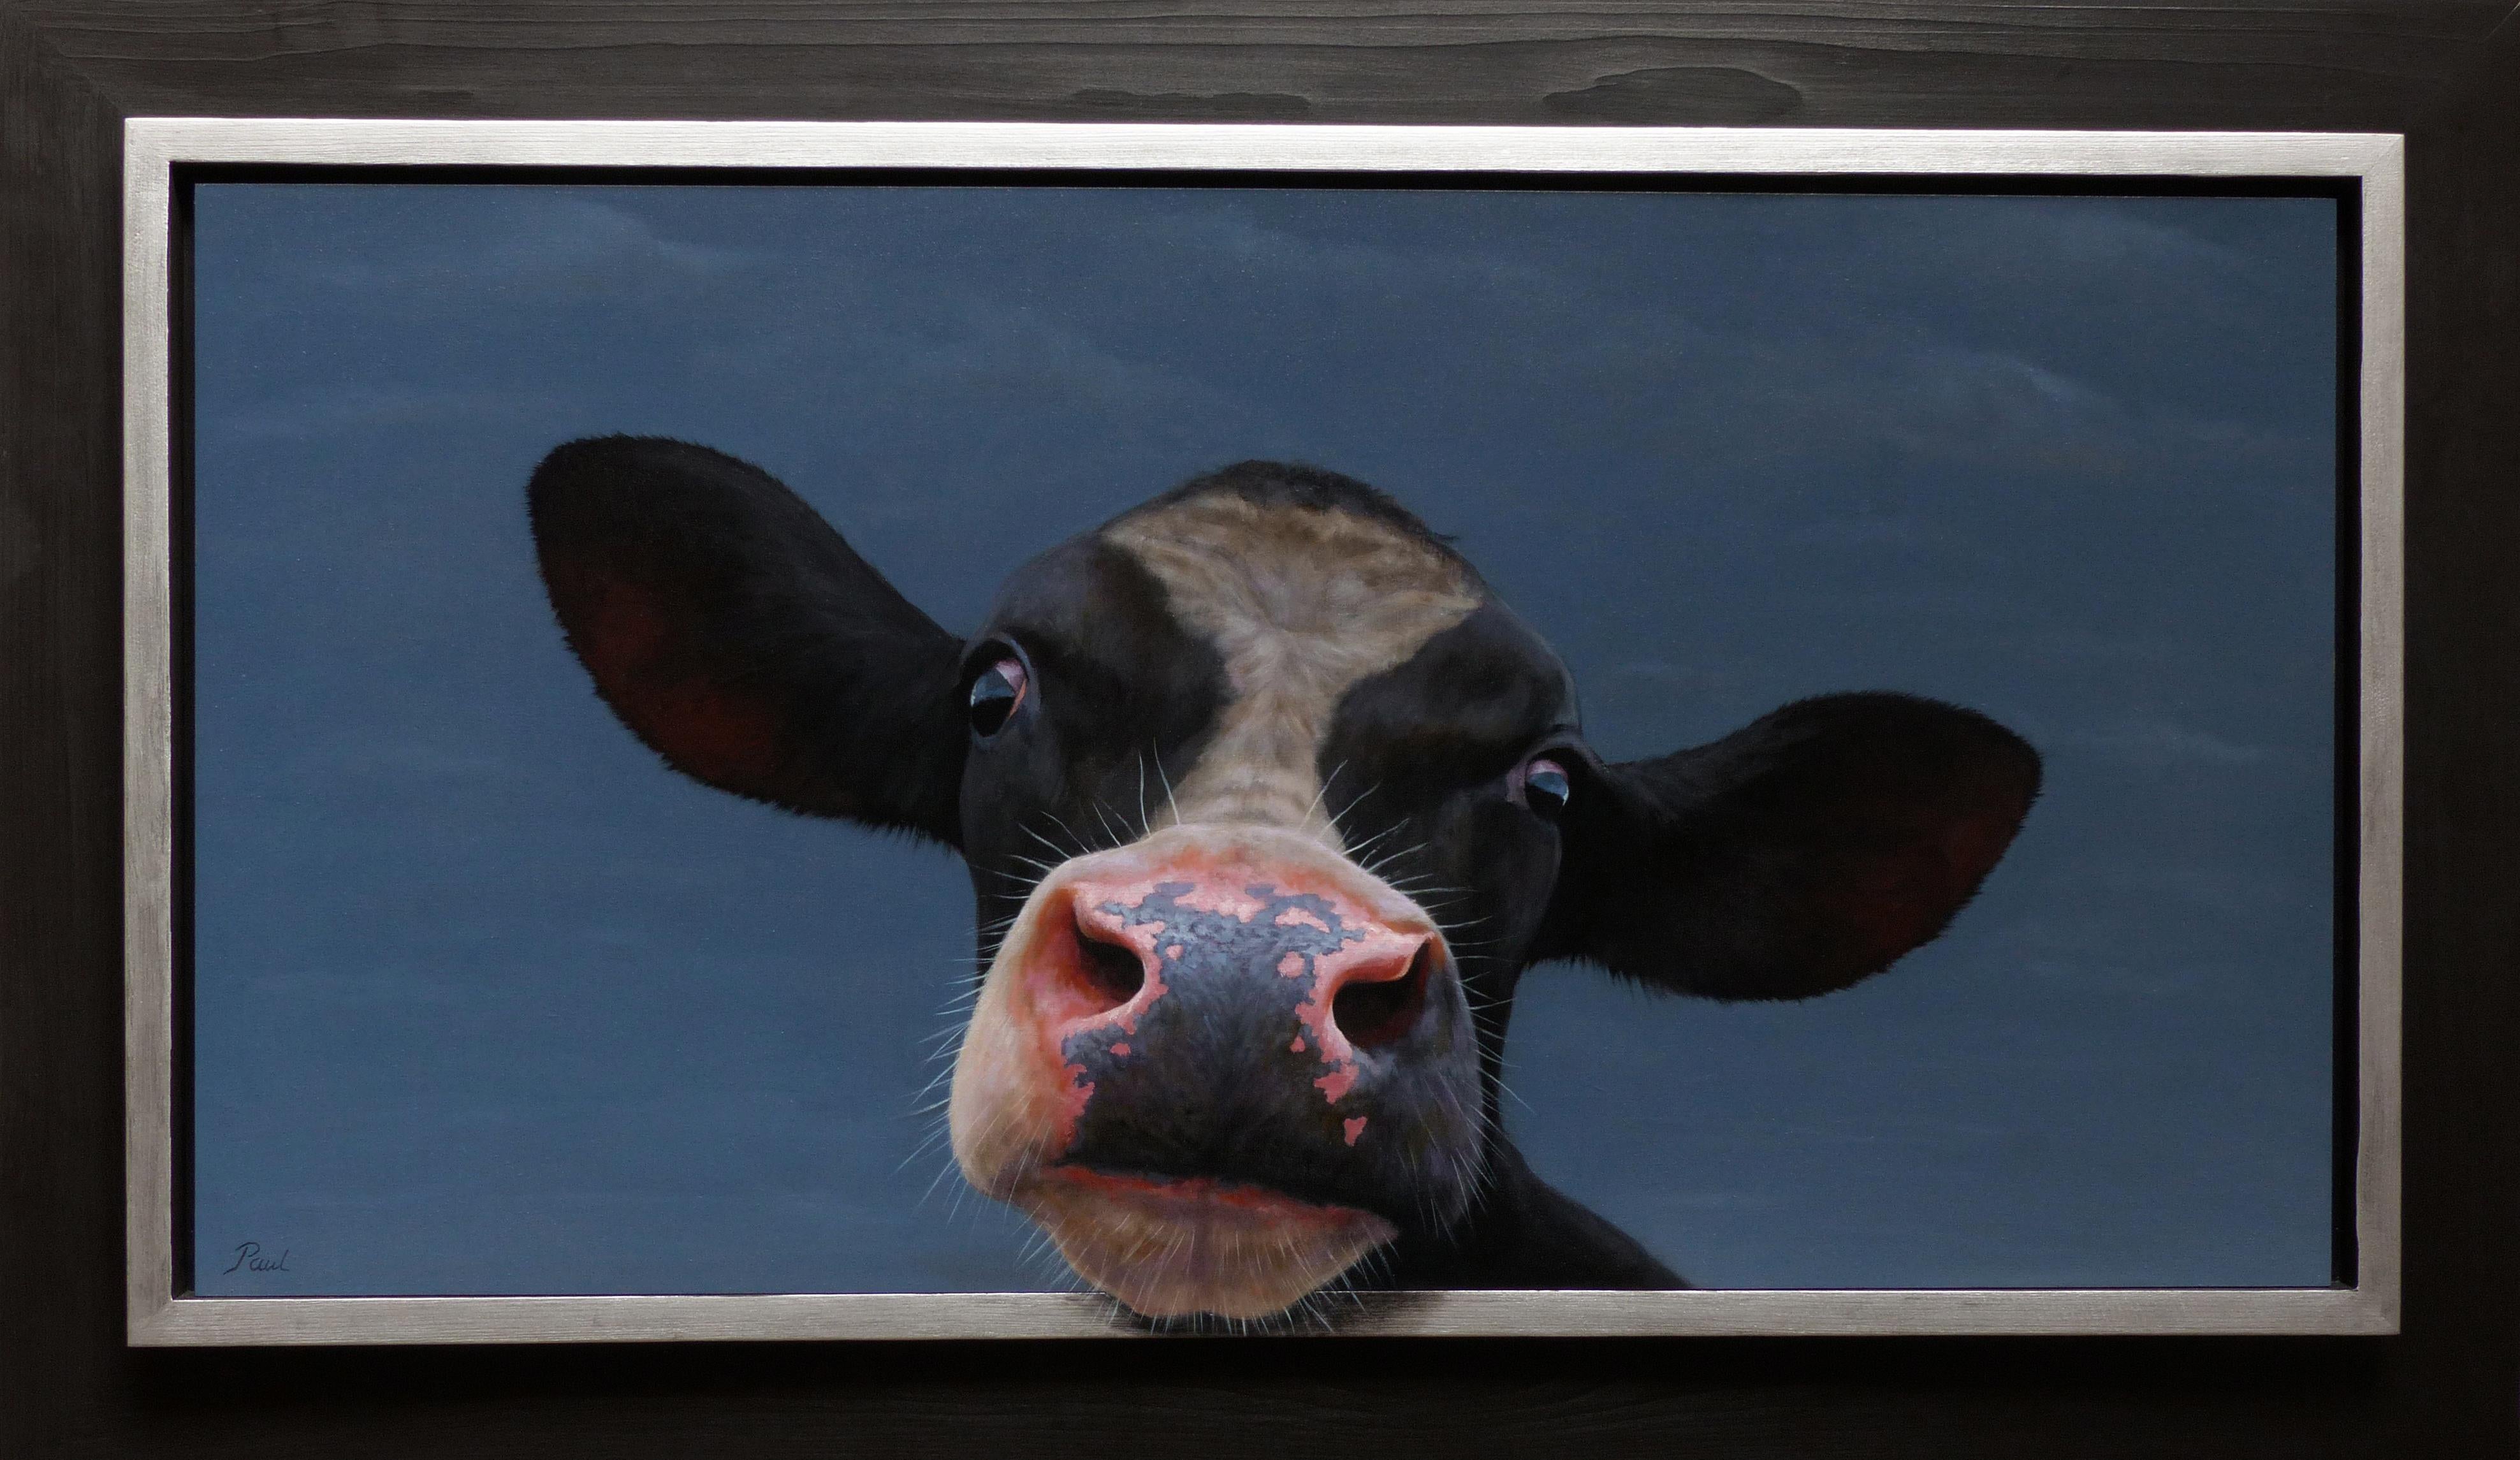 Paul Jansen Figurative Painting - "Calf Portrait" Contemporary Dutch Oil Painting of a Cow